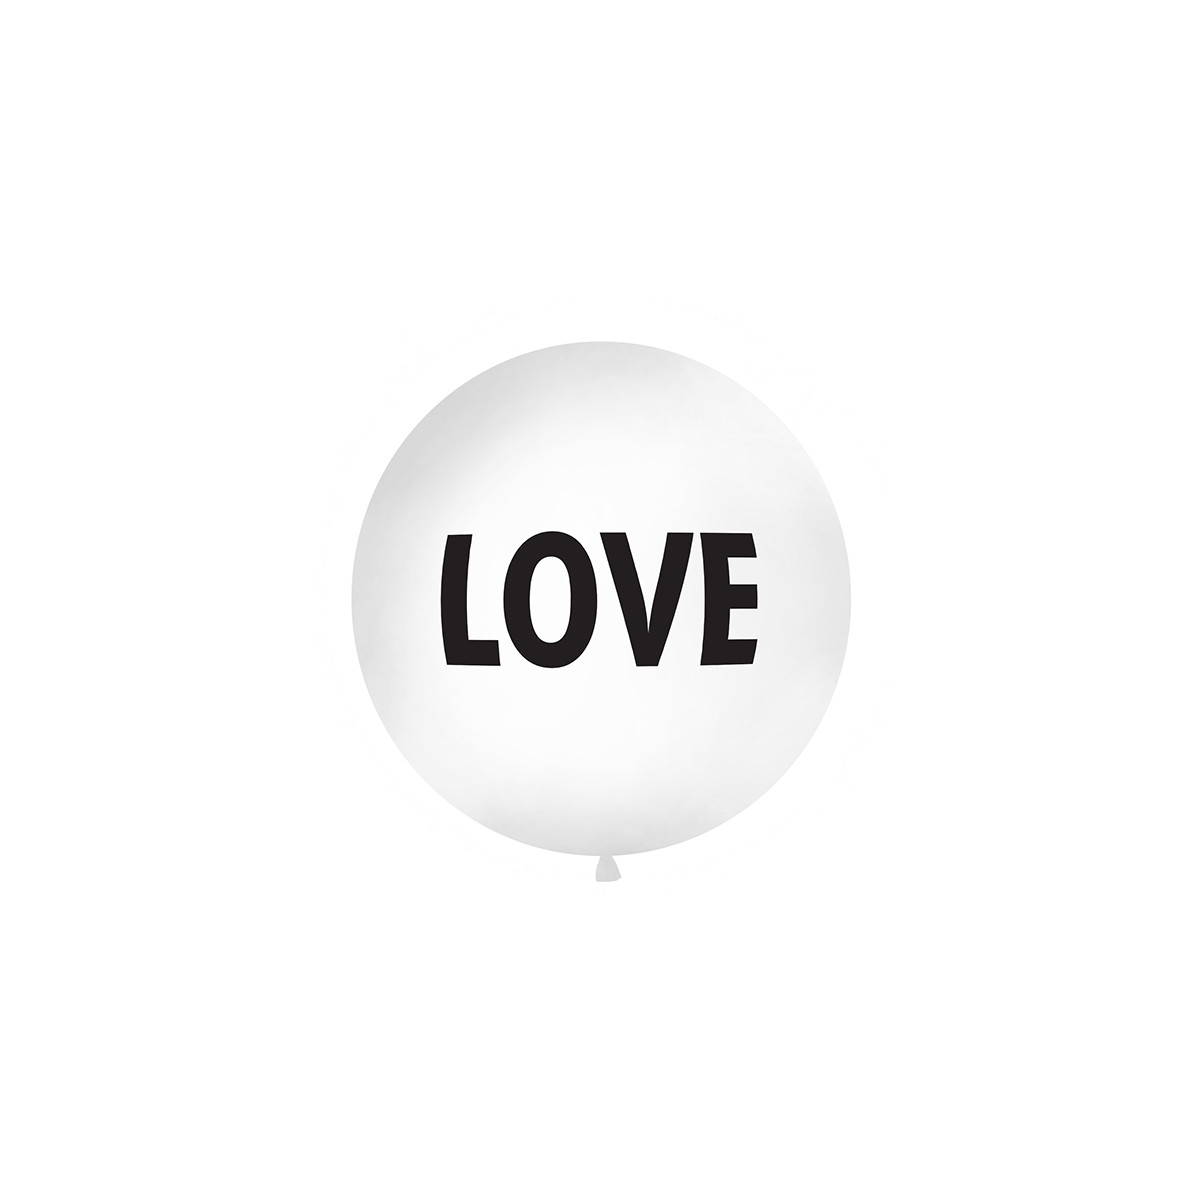 Ballon géant baudruche "Love" 1 mètre - Blanc